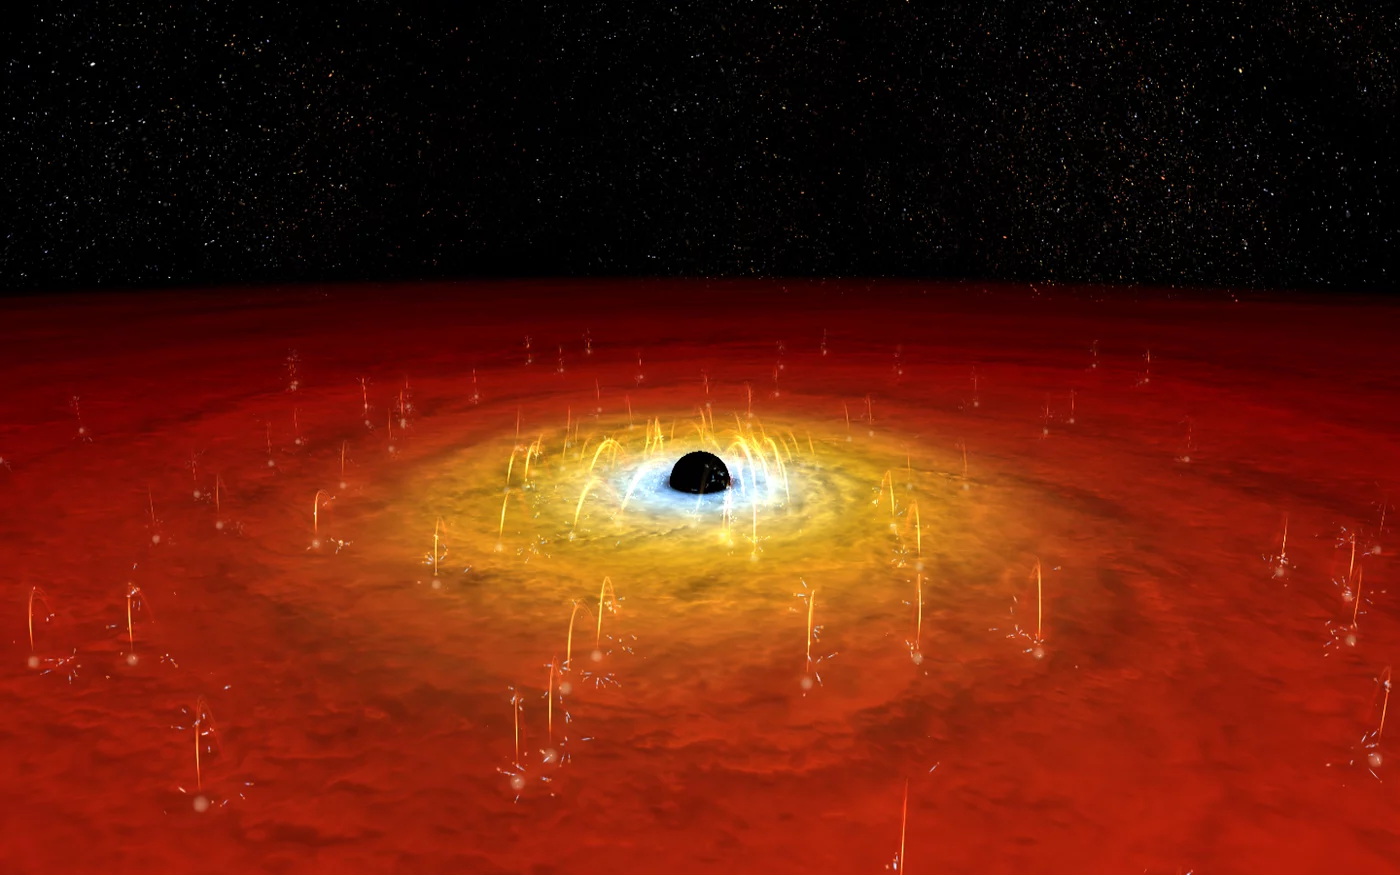 An artist's rendition of a black hole